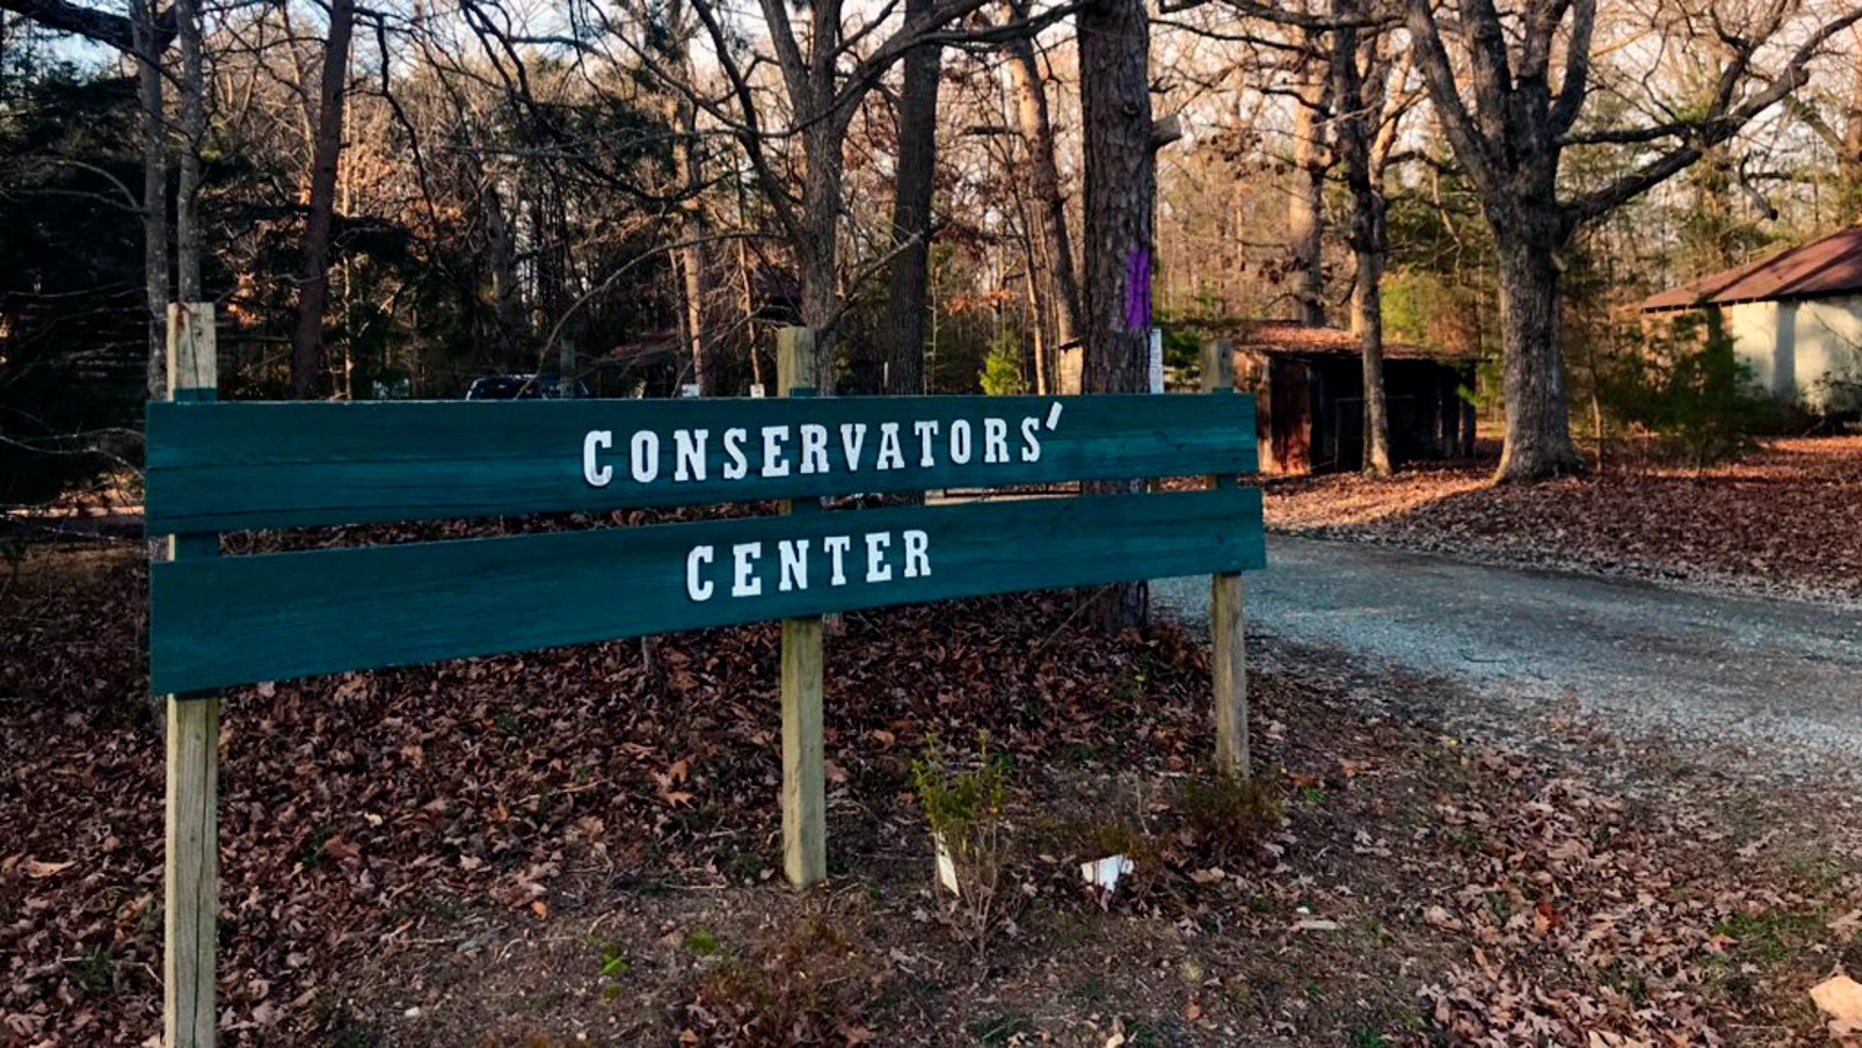 Lion kills 22-year-old worker at North Carolina wildlife conservatory, officials say